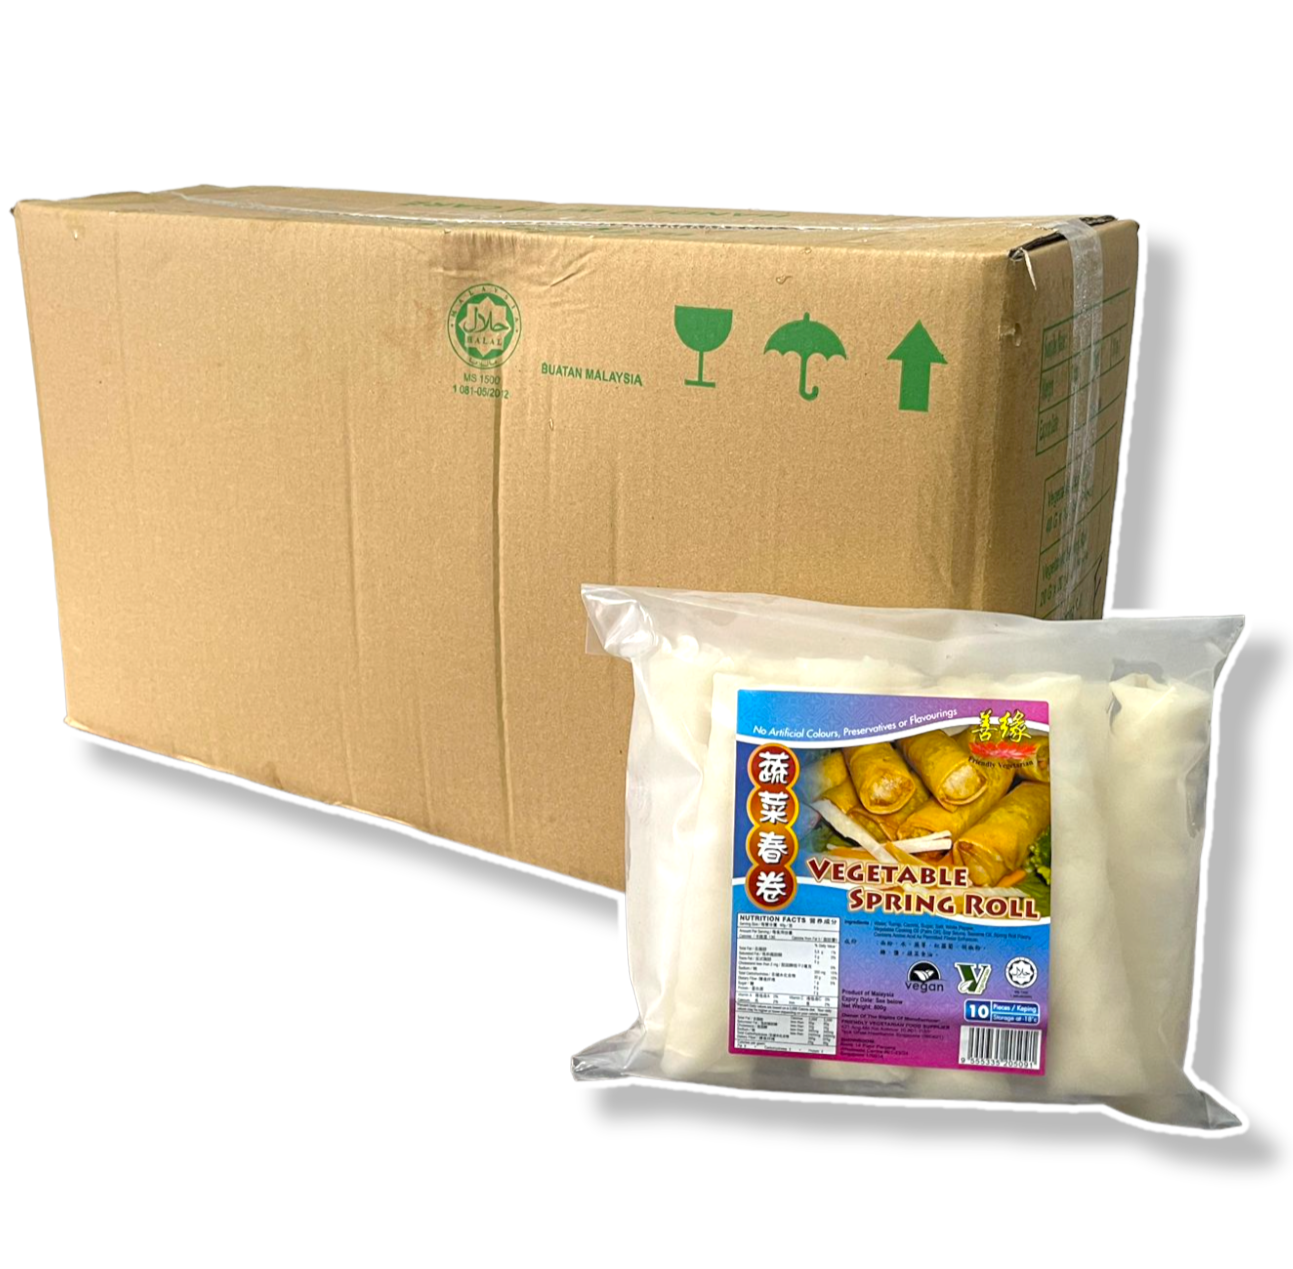 Image Vegan Vegetable Spring Roll 善缘 - 蔬菜大春卷(10 pieces) 600grams carton of 15 packets